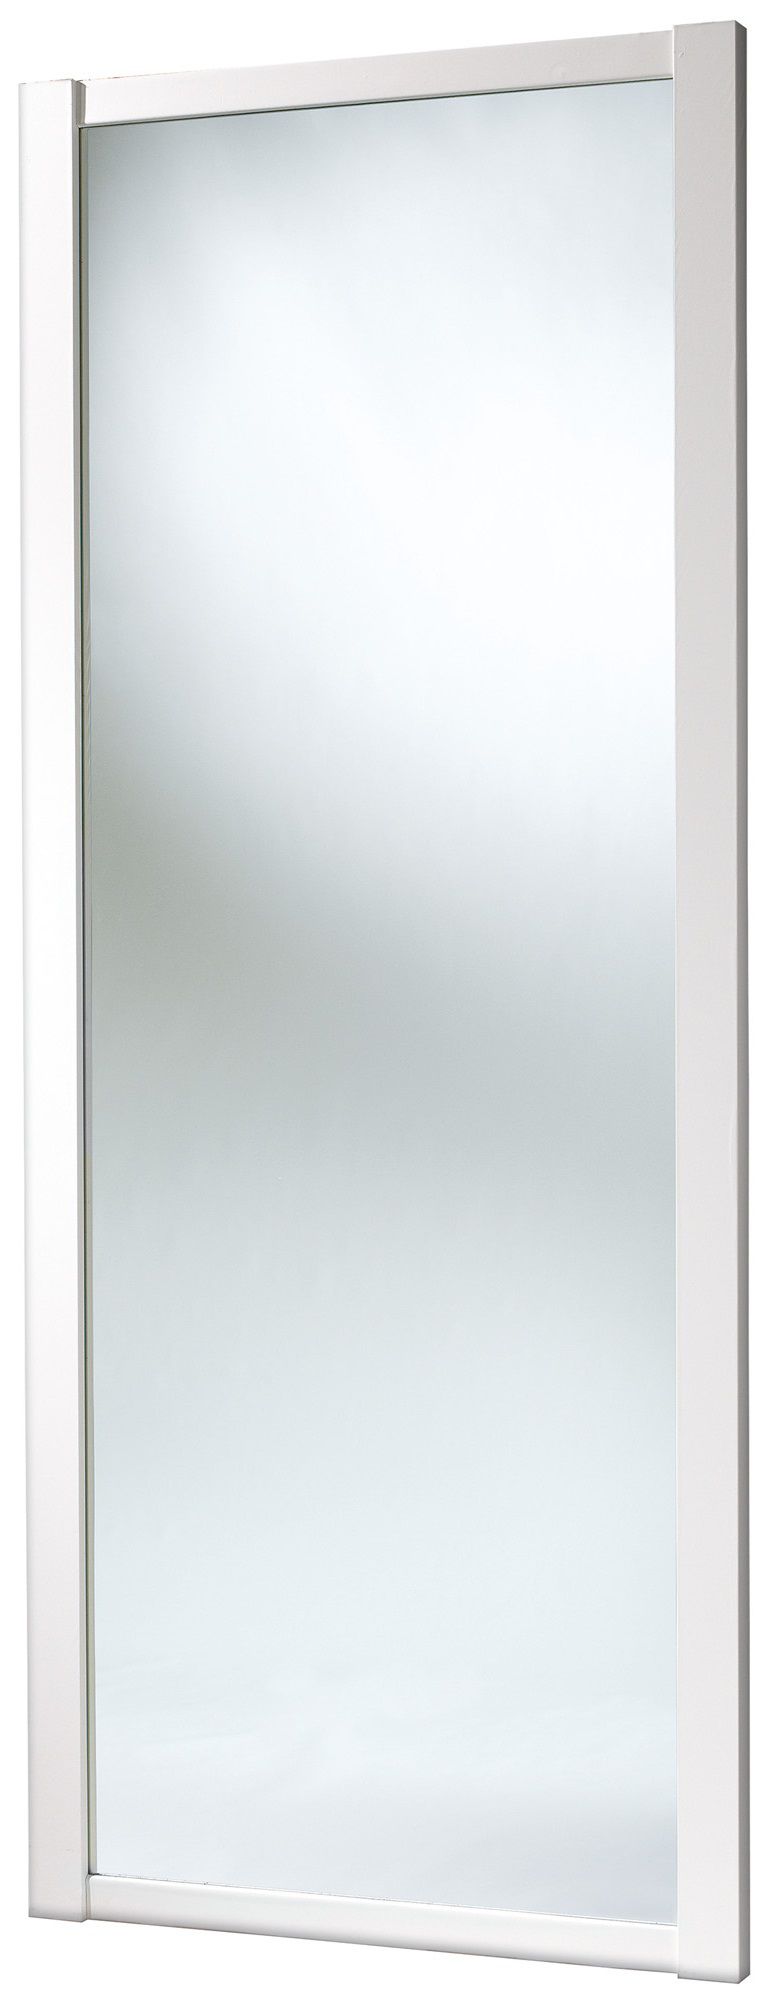 Spacepro Classic Shaker White Mirrored Sliding wardrobe door (H) 2220mm x (W) 762mm